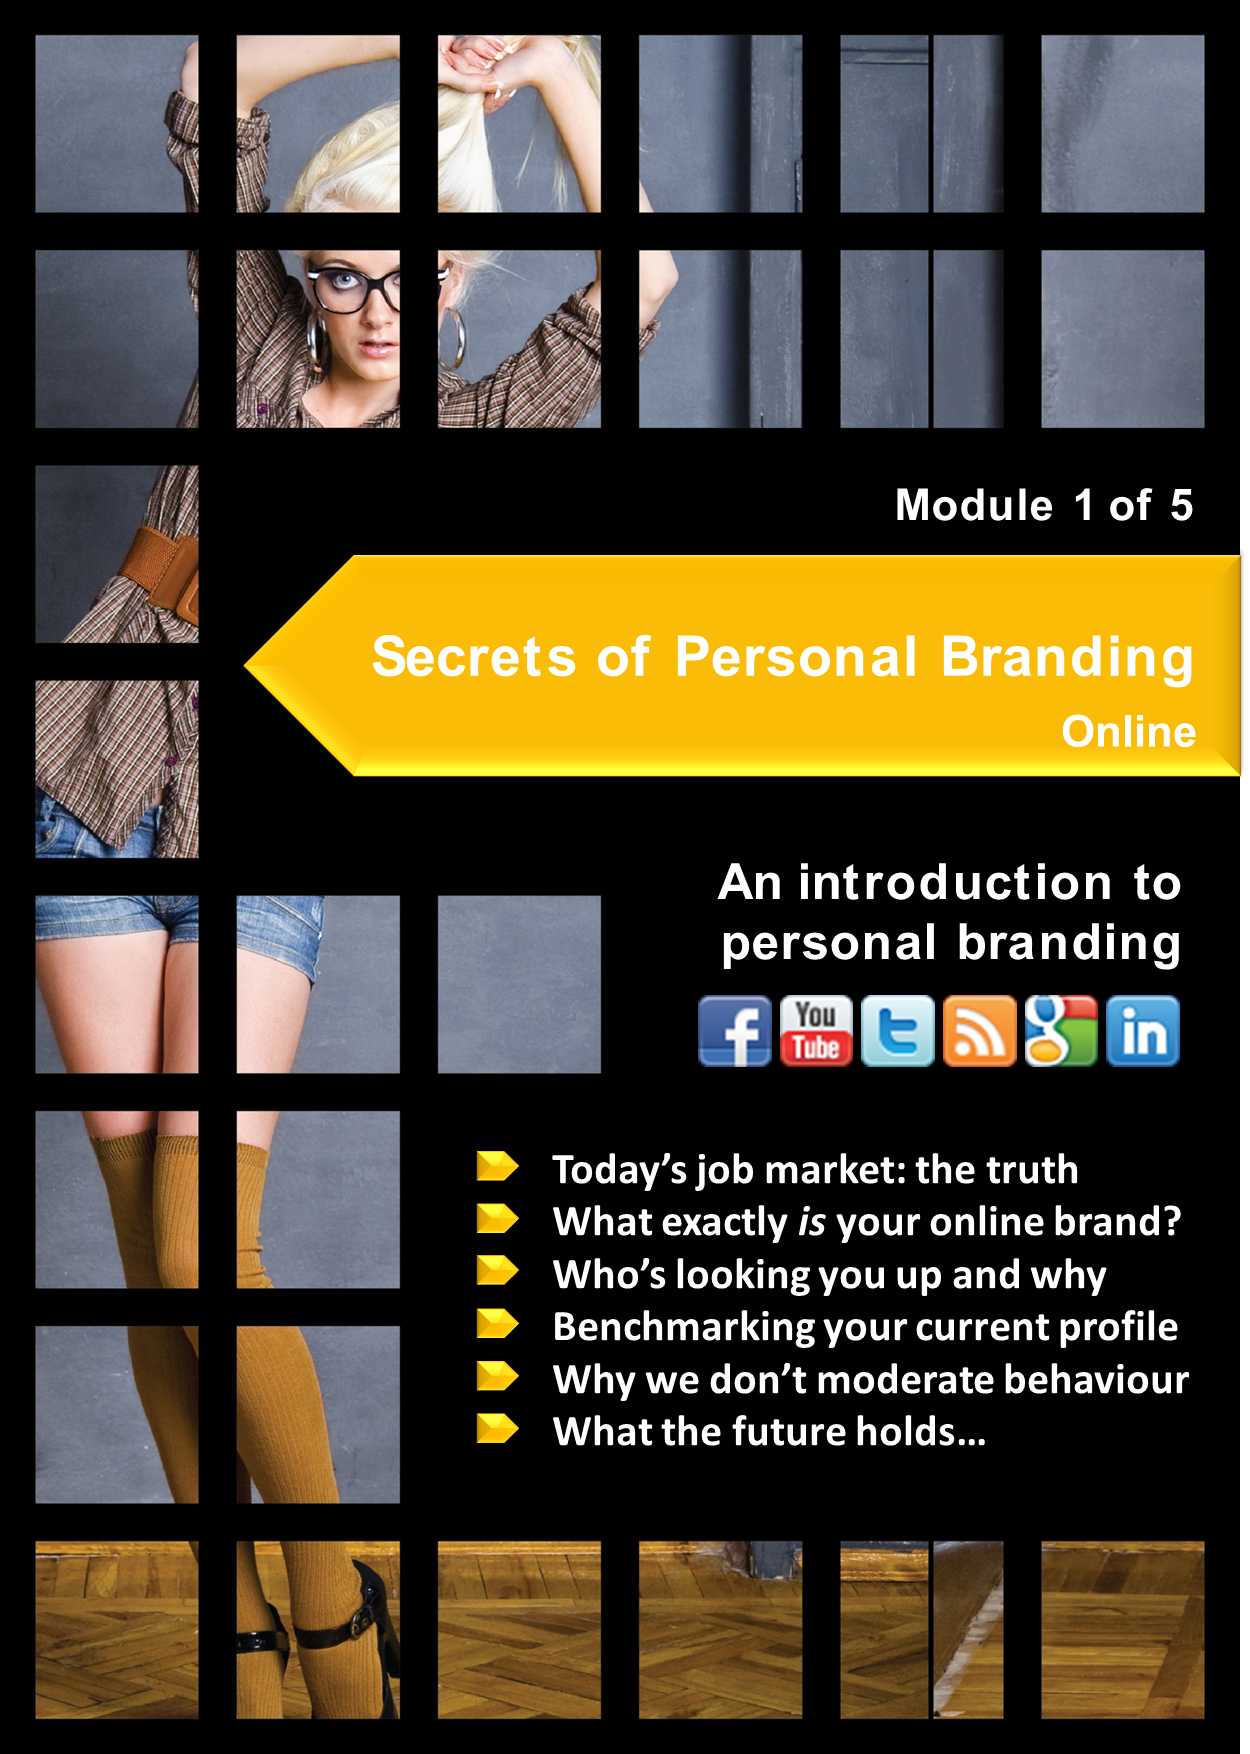 Secrets of Personal Branding Online course